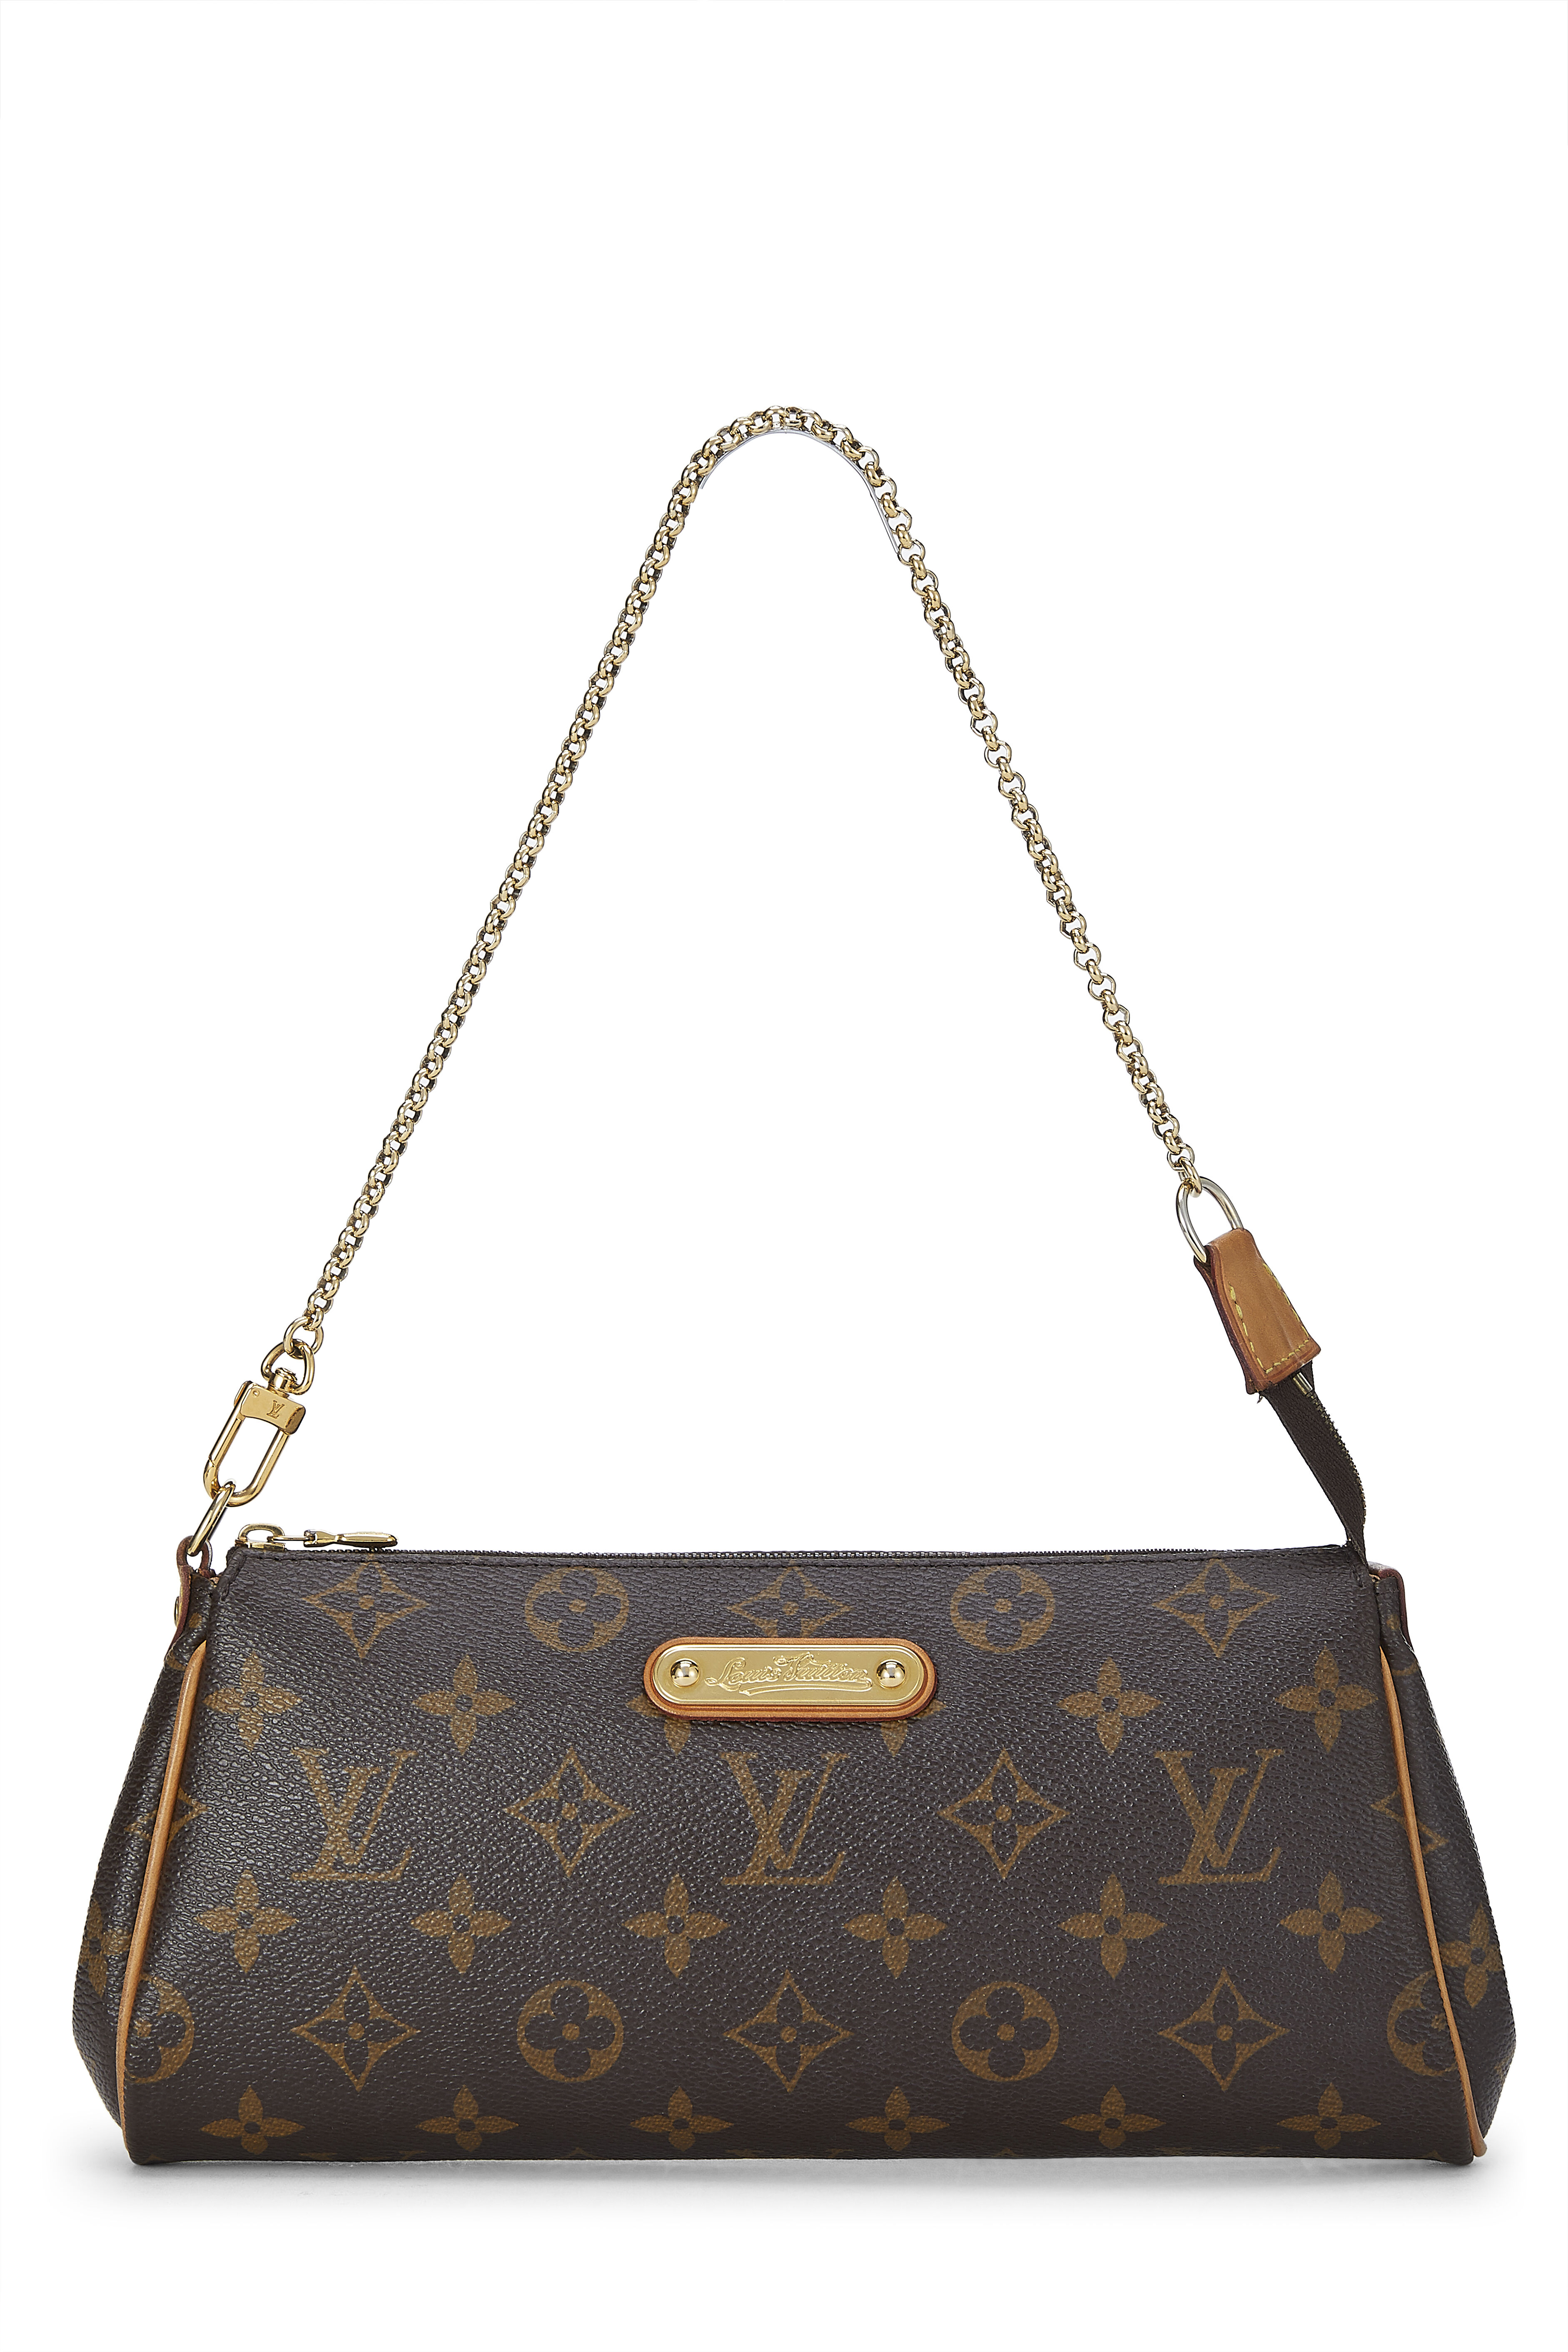 Louis Vuitton - Eva Crossbody Bag - Monogram Canvas